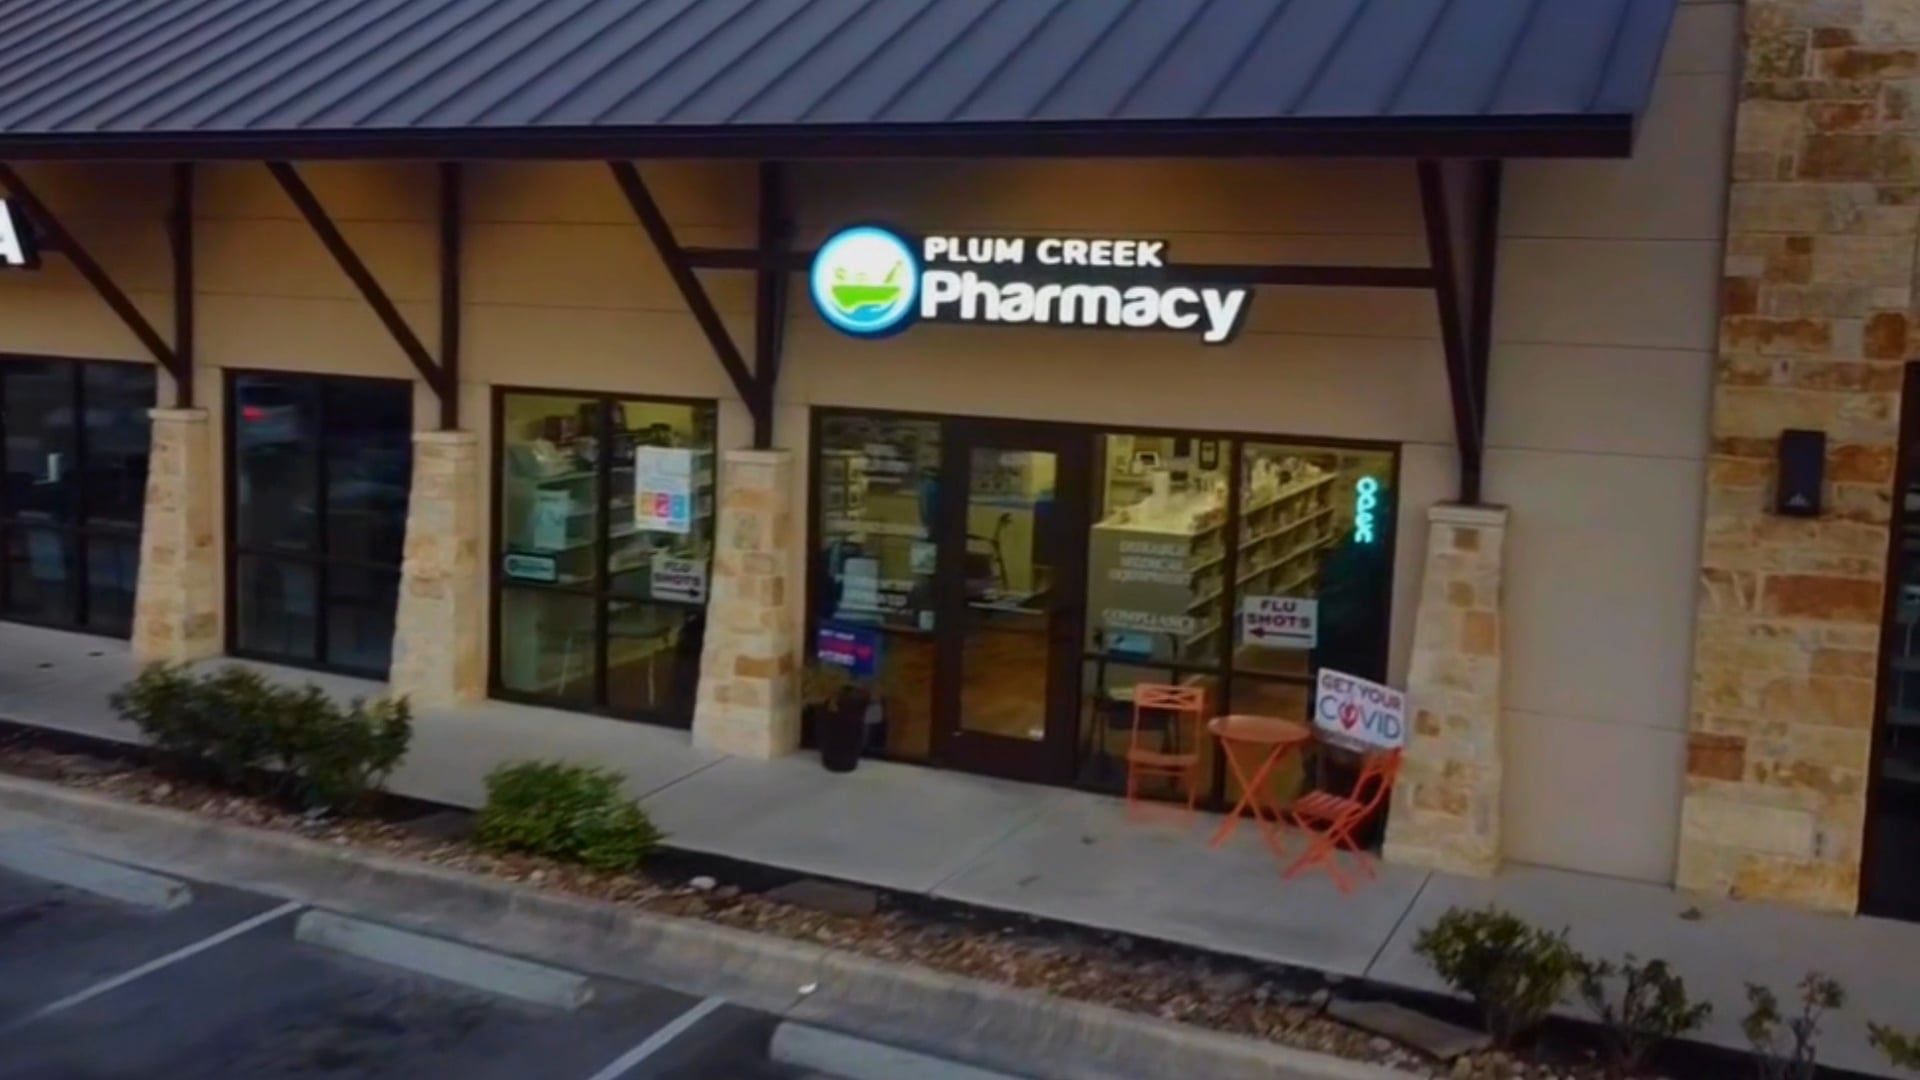 Plum creek pharmacy